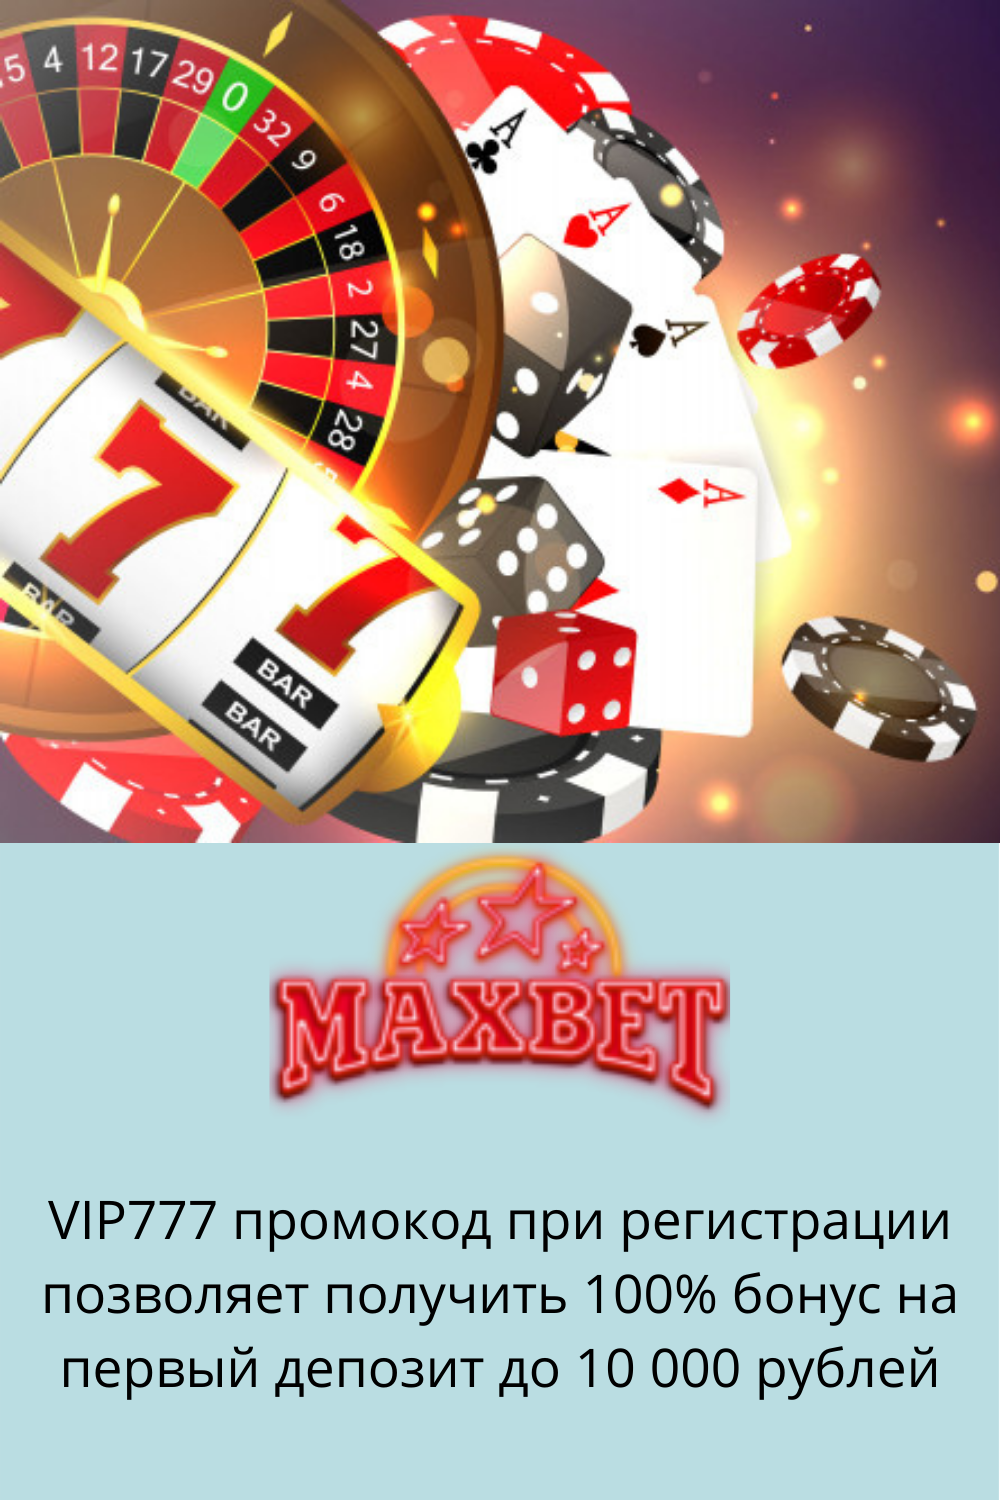 Casino x зеркало мобильная касинокс13 ру